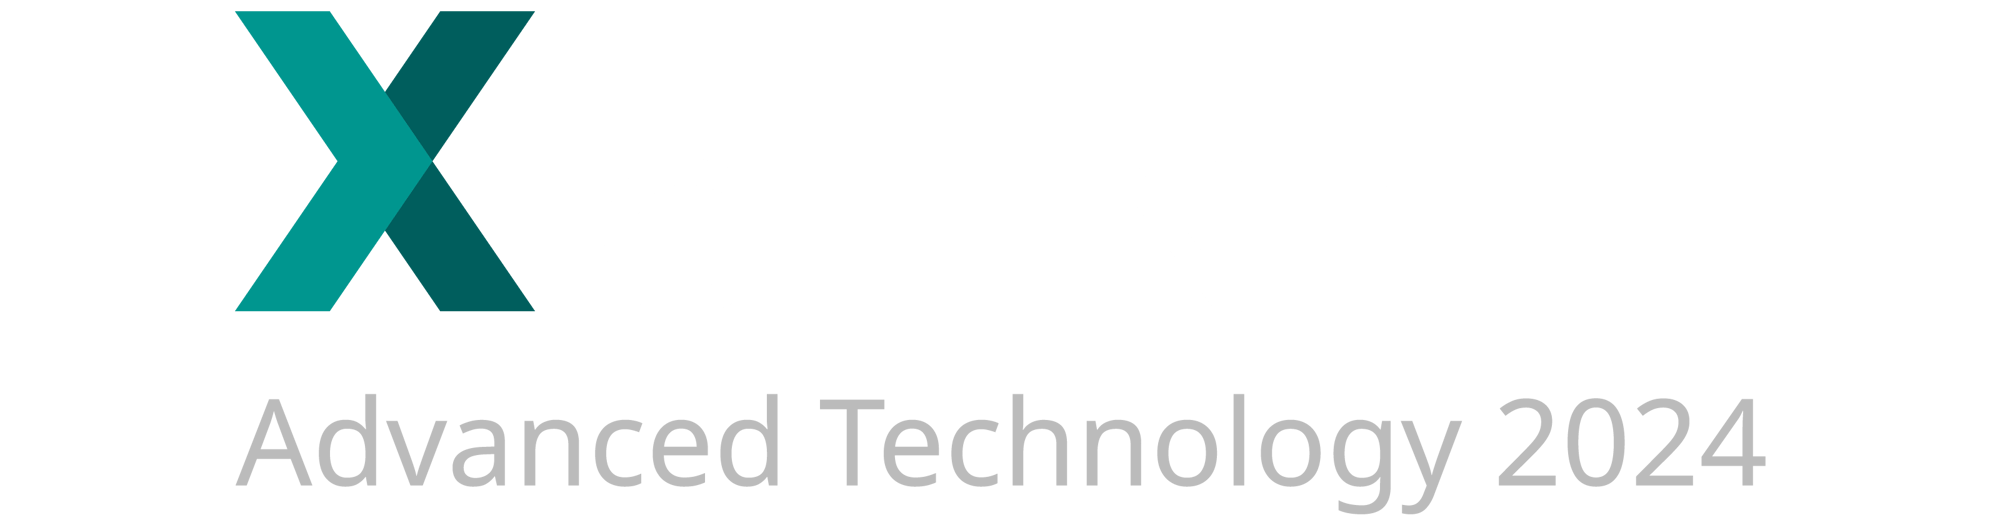 XCelent-Advanced-Technology-2024-rev (1)-1